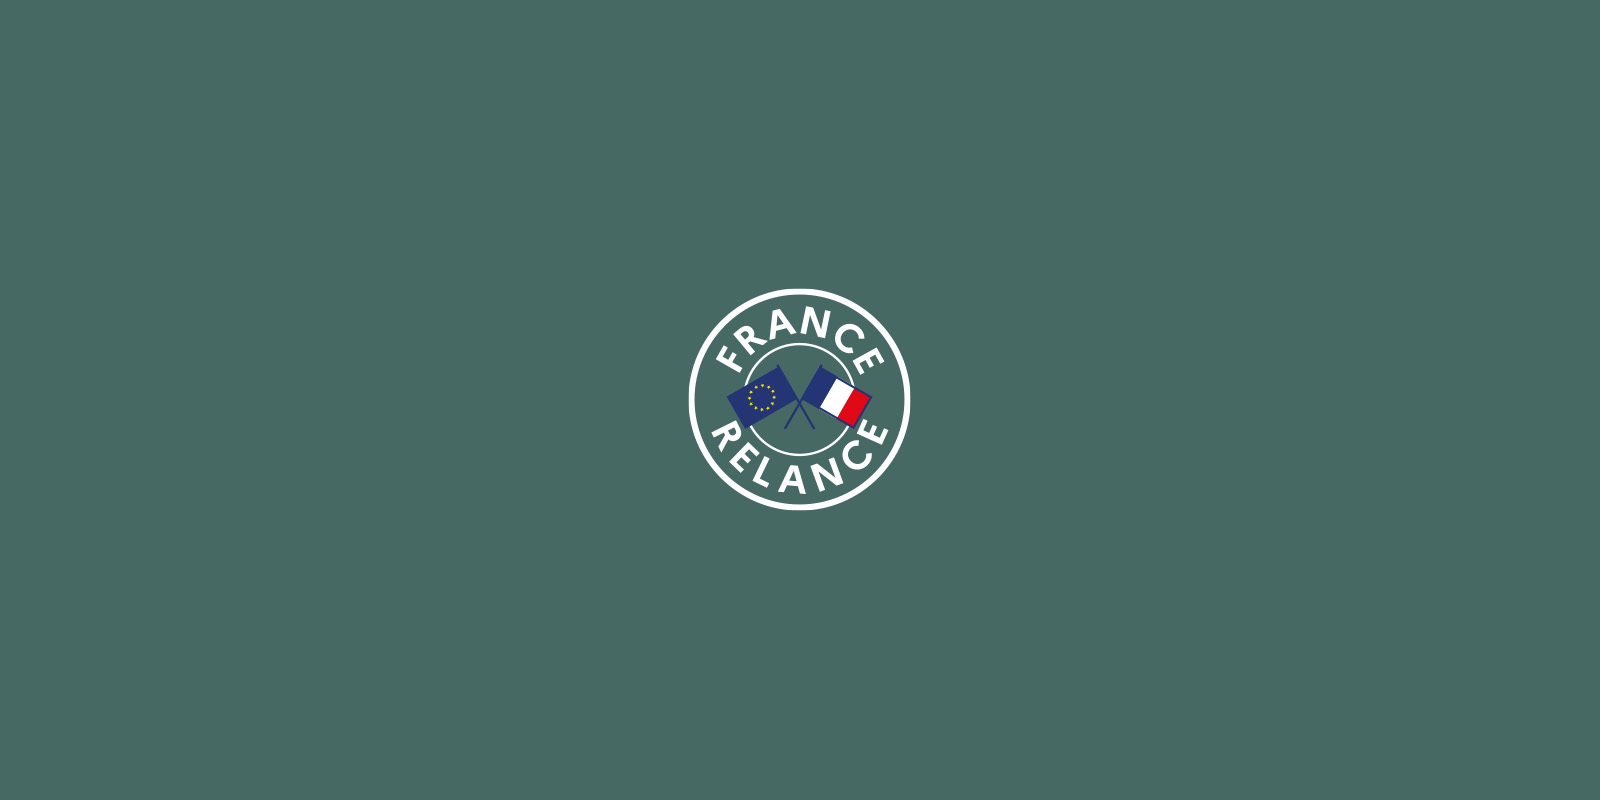 Bandeau France Relance